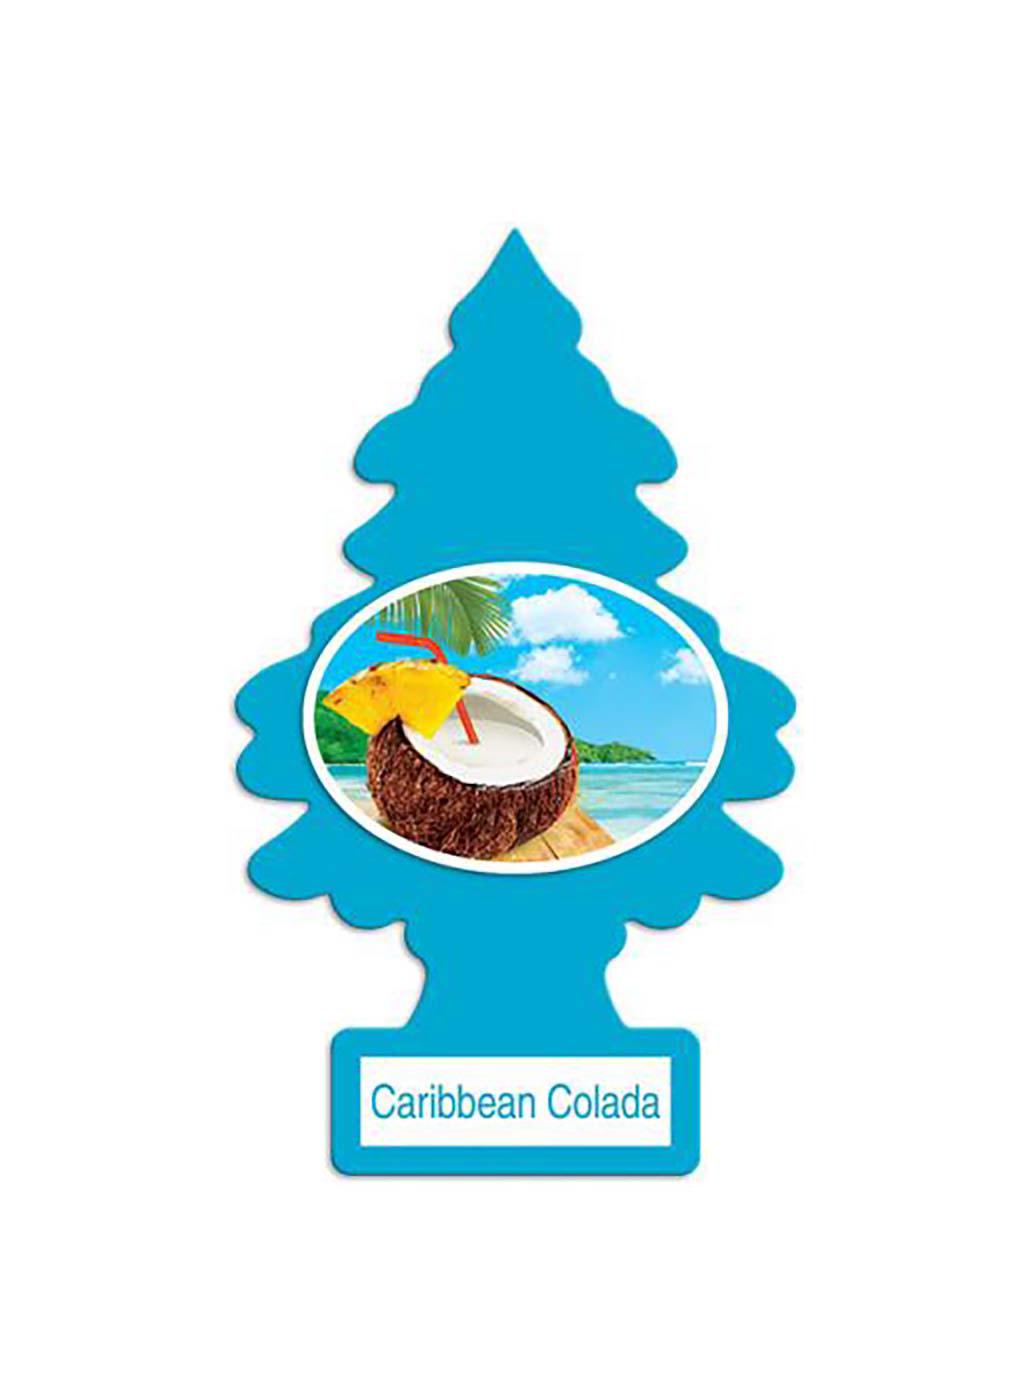 Little Trees Car Air Fresheners - Caribbean Coloda; image 2 of 2